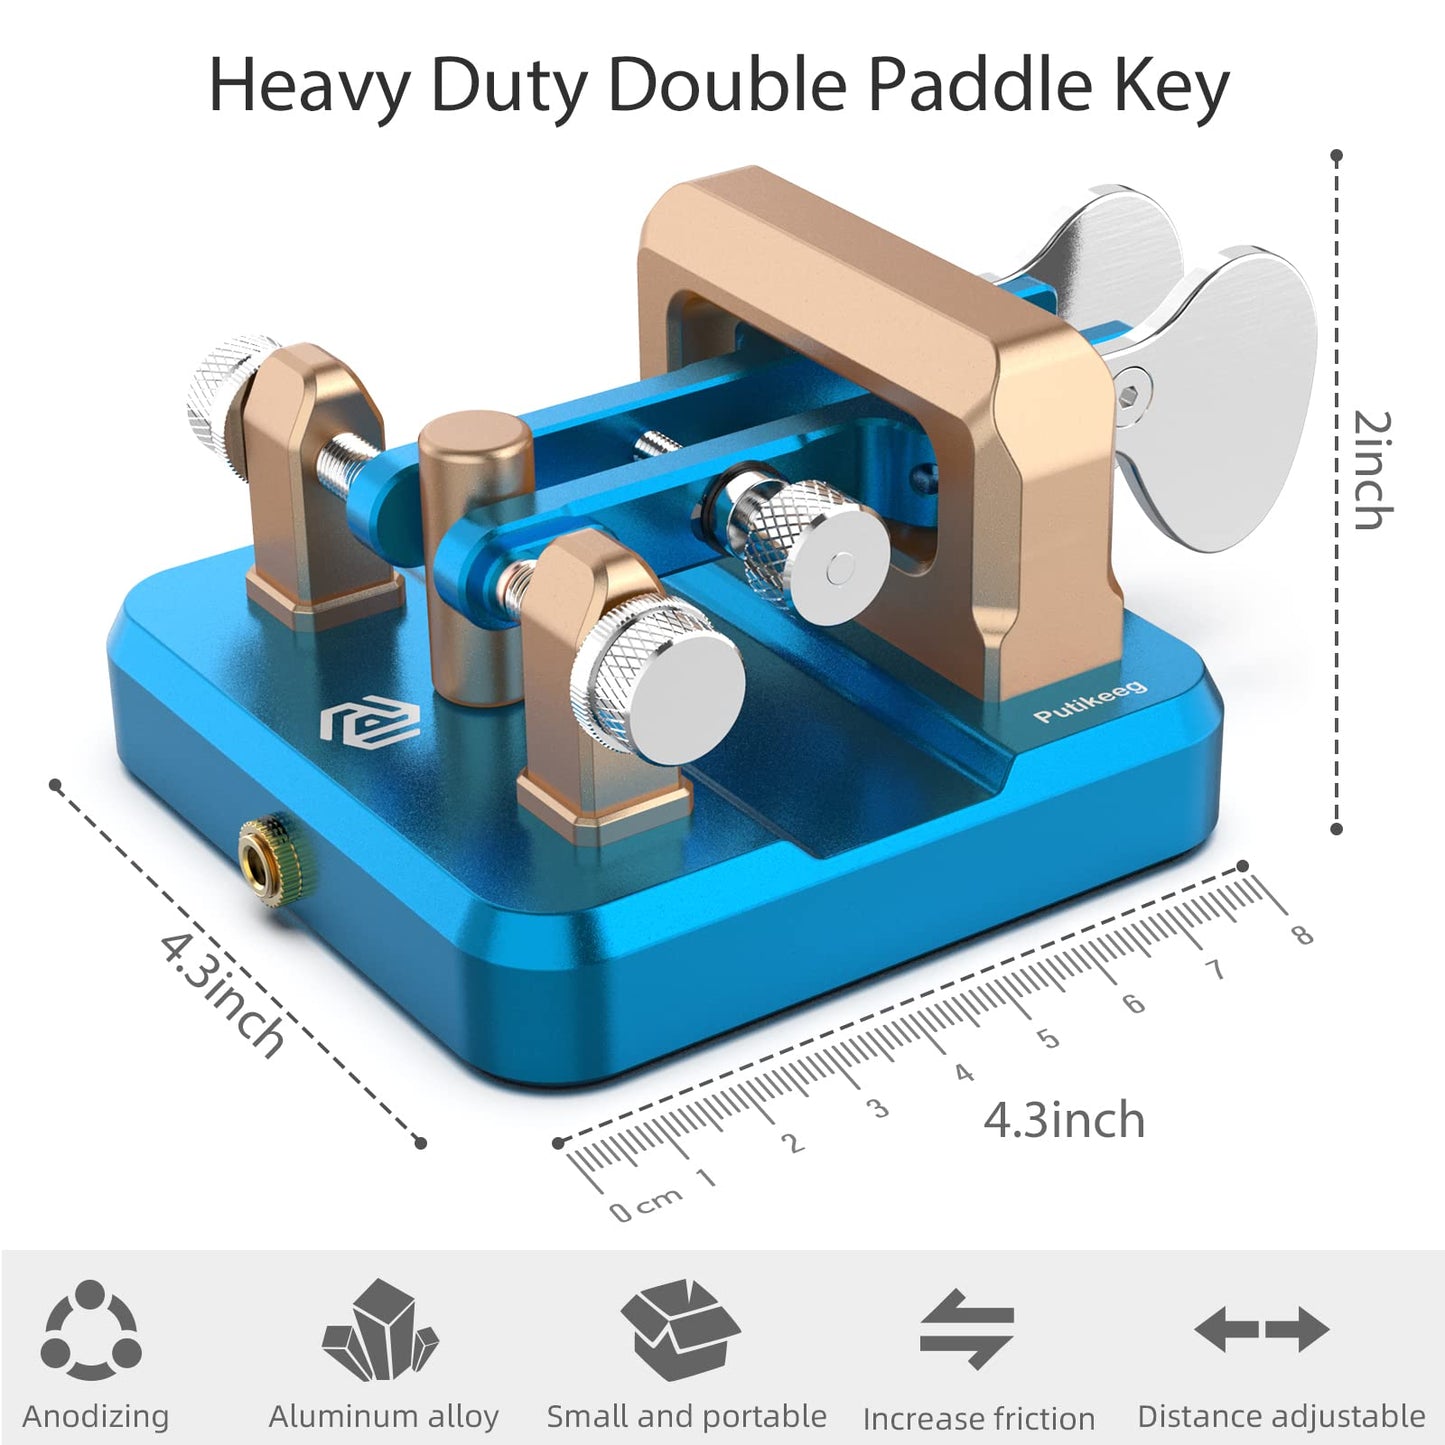 CW Key Automatic Double Paddle